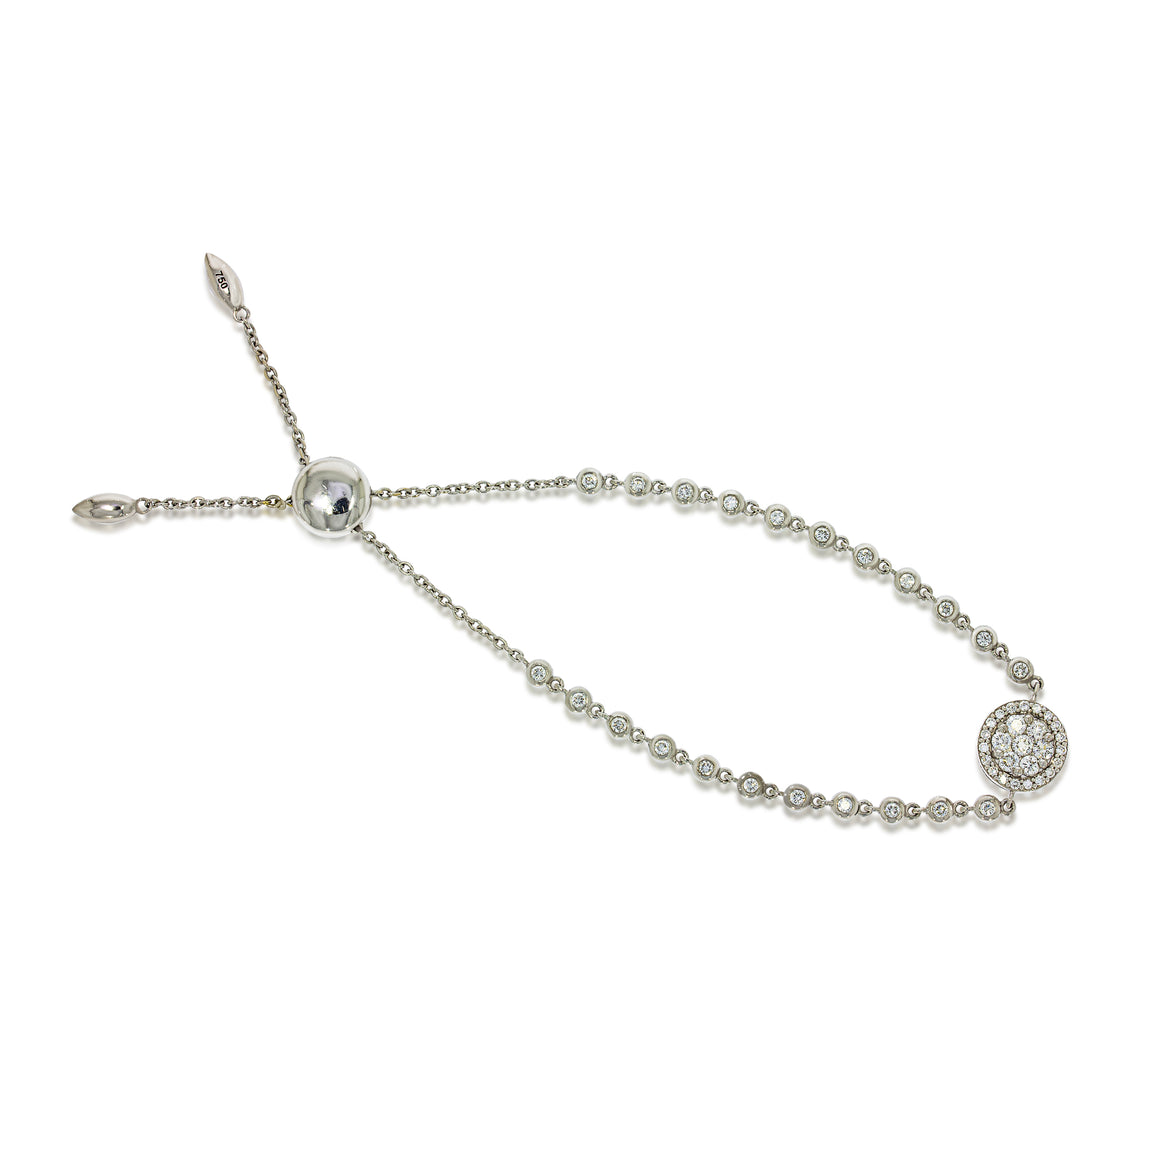 Bezel-set round diamonds in a flexible white gold bracelet. Adjustable Tie Bracelet.  beautiful flower pave diamonds halo diamonds around it.